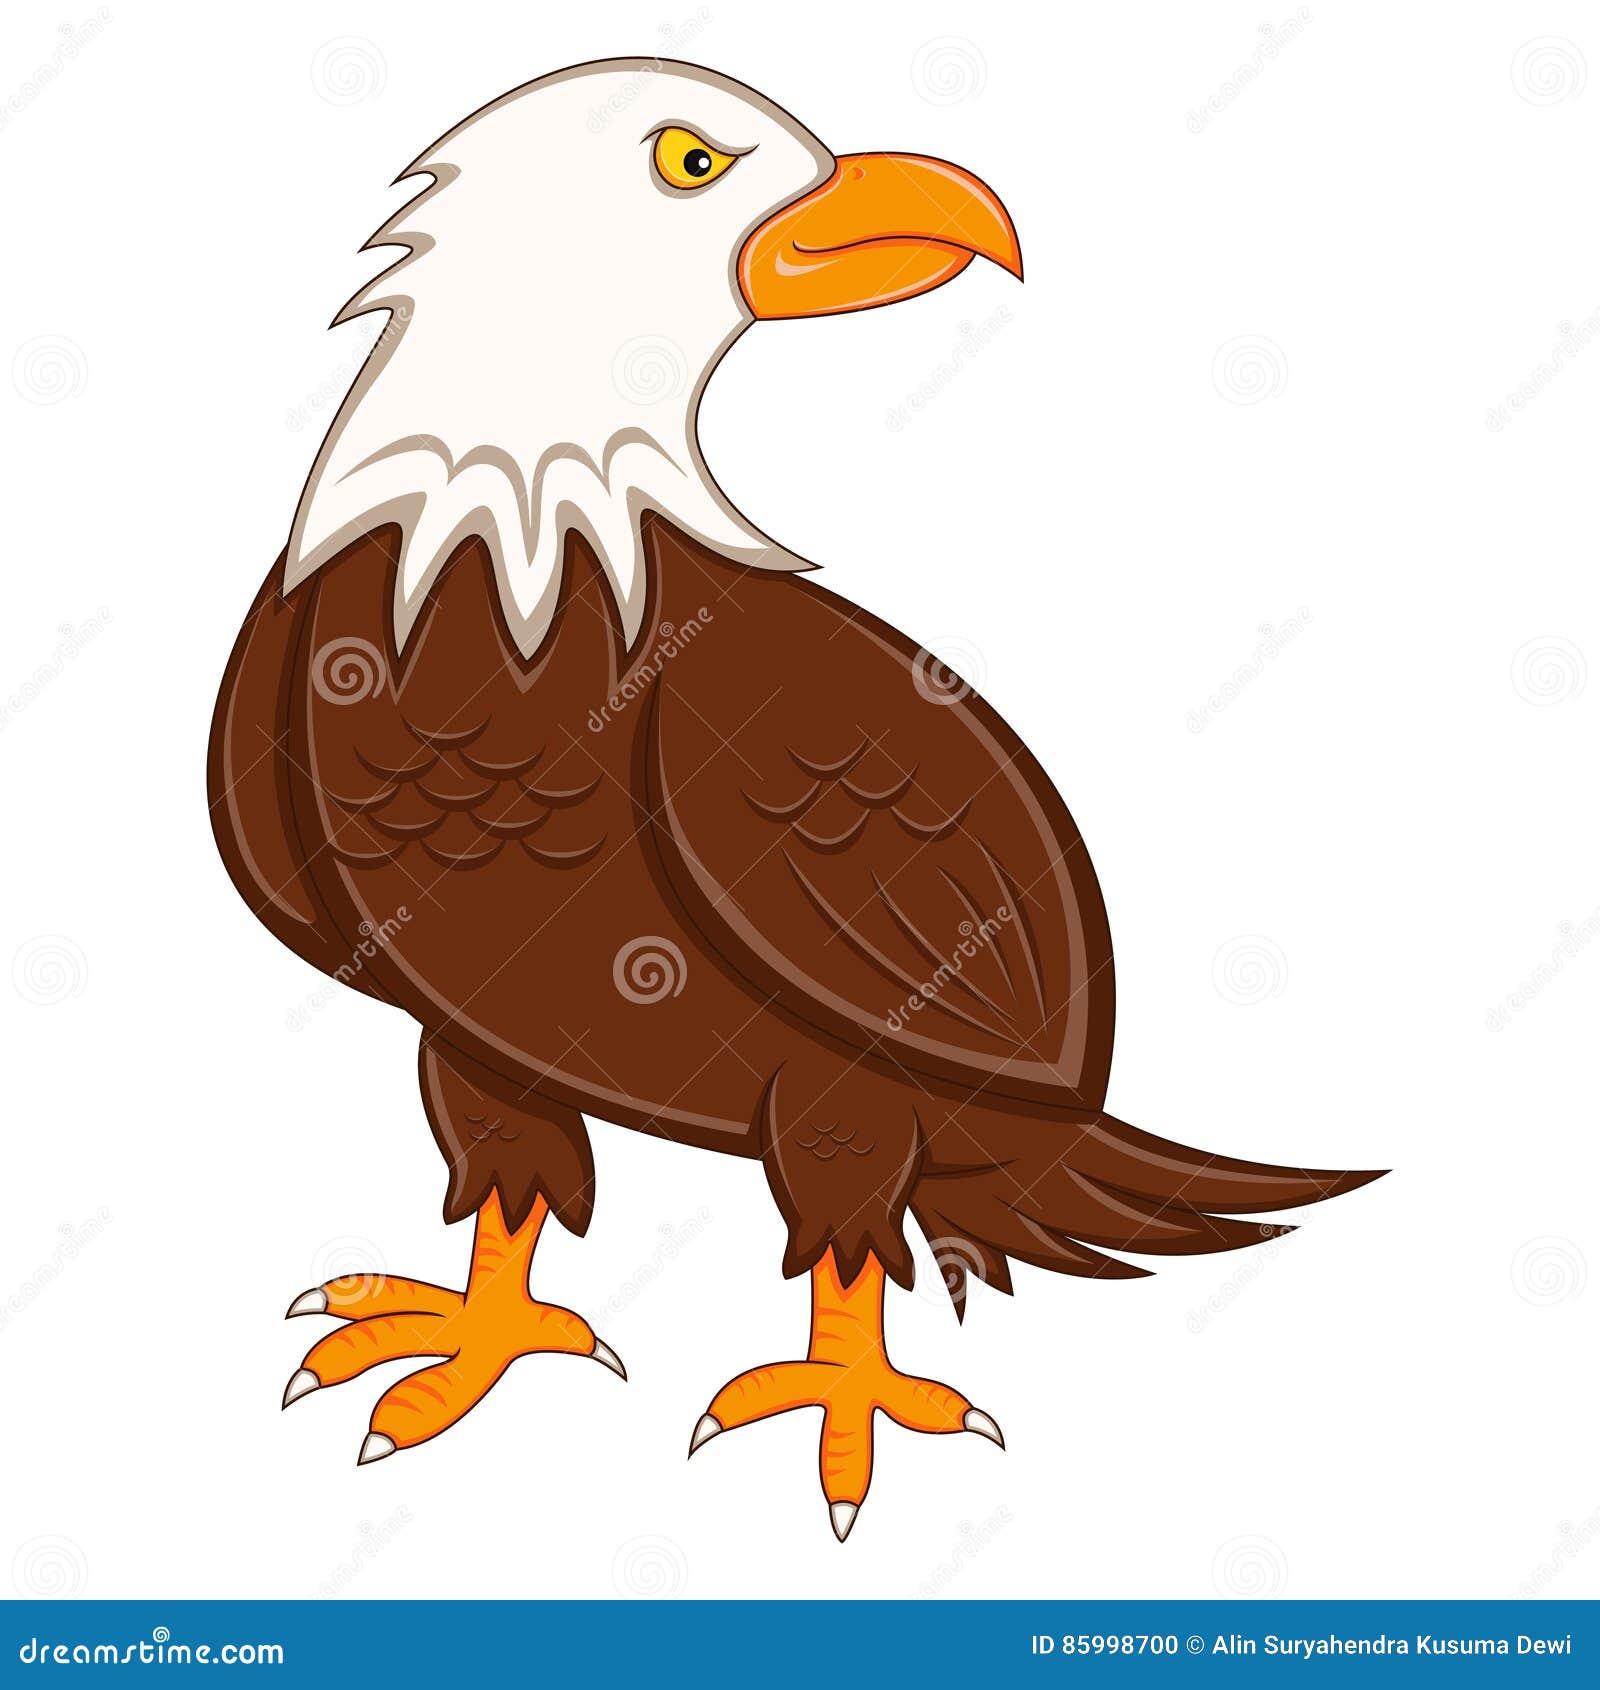 Cool Eagle cartoon stock vector. Illustration of nature - 85998700